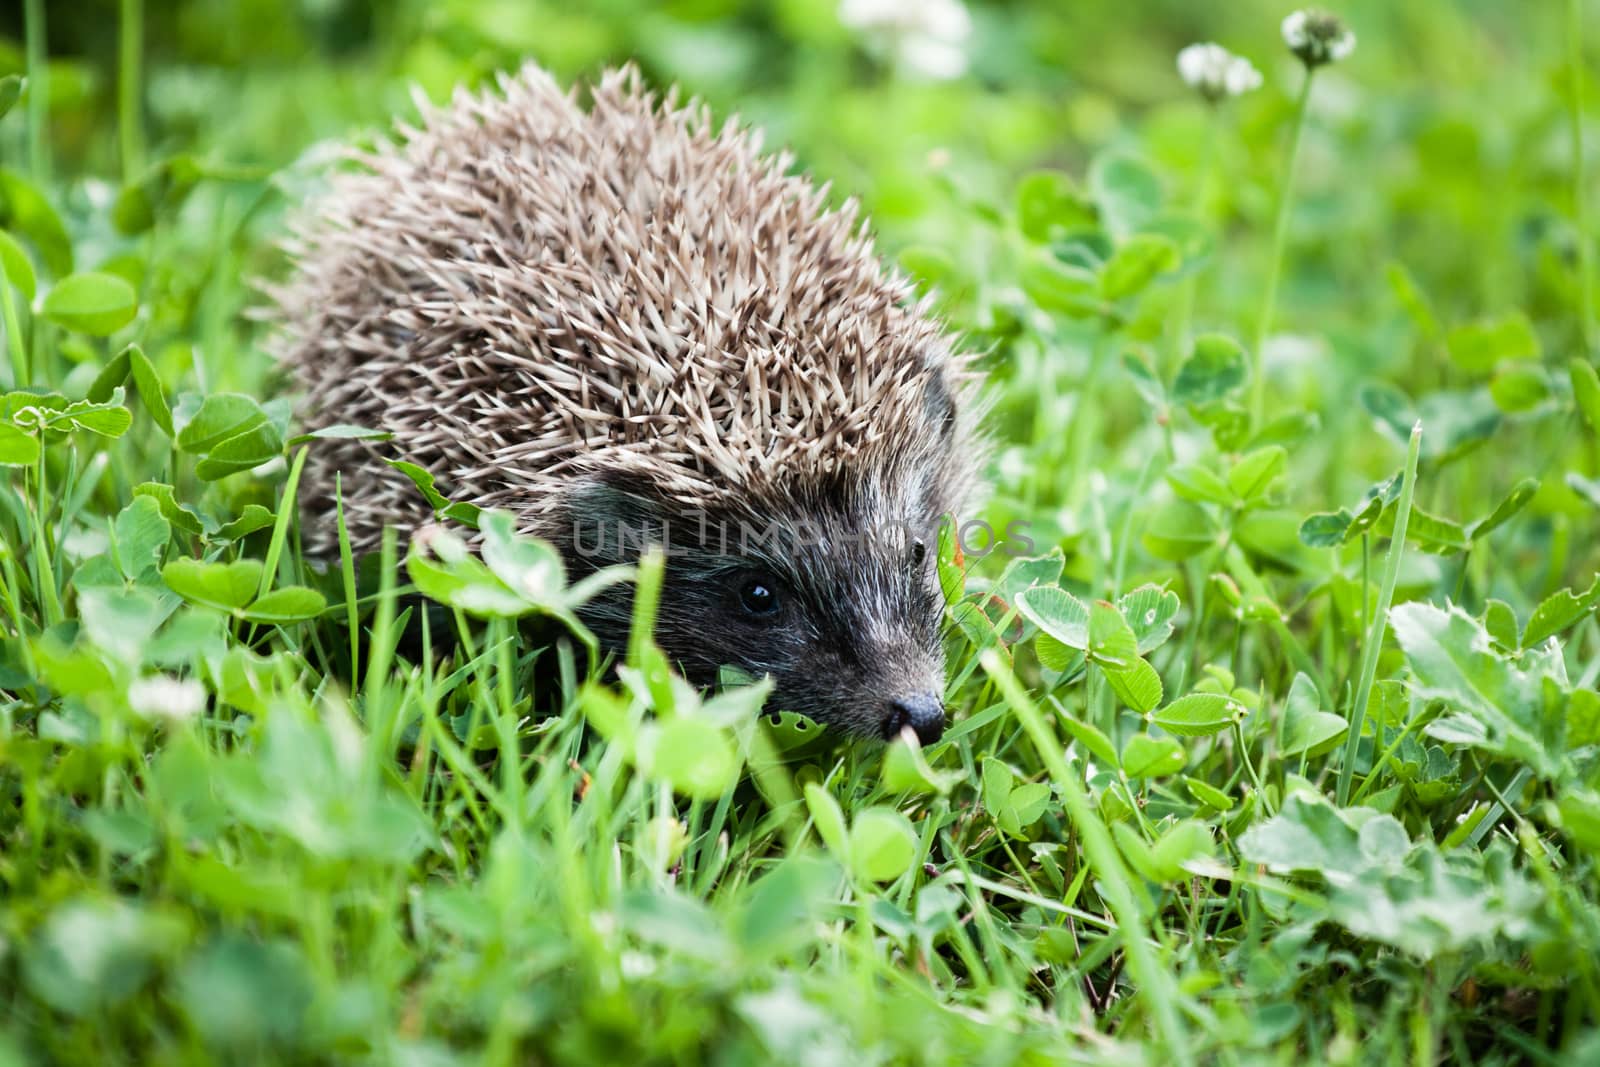 young hedgehog walking in backyard garden searchinf food